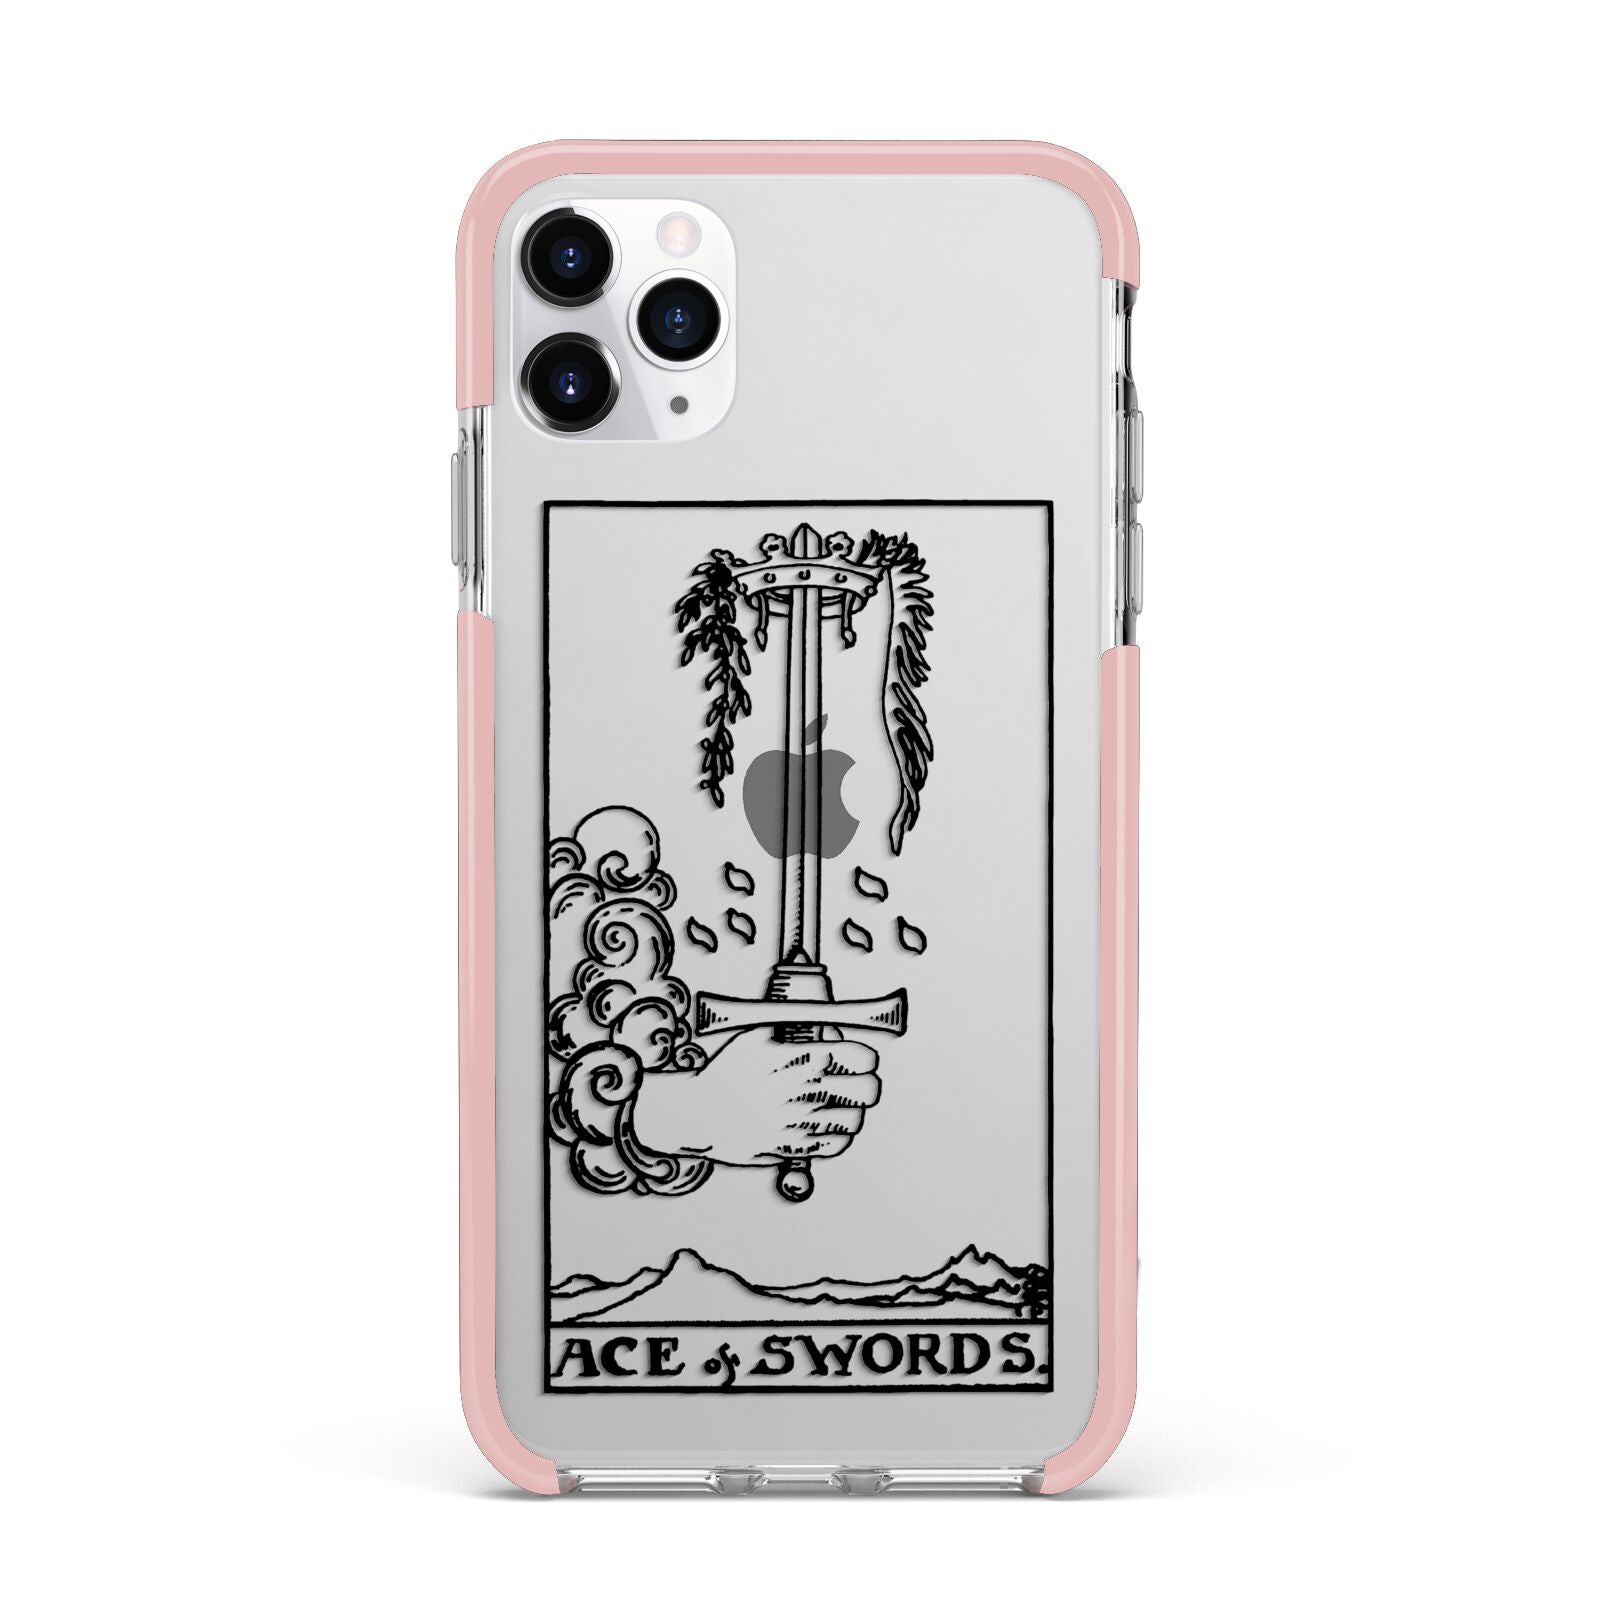 Ace of Swords Monochrome iPhone 11 Pro Max Impact Pink Edge Case